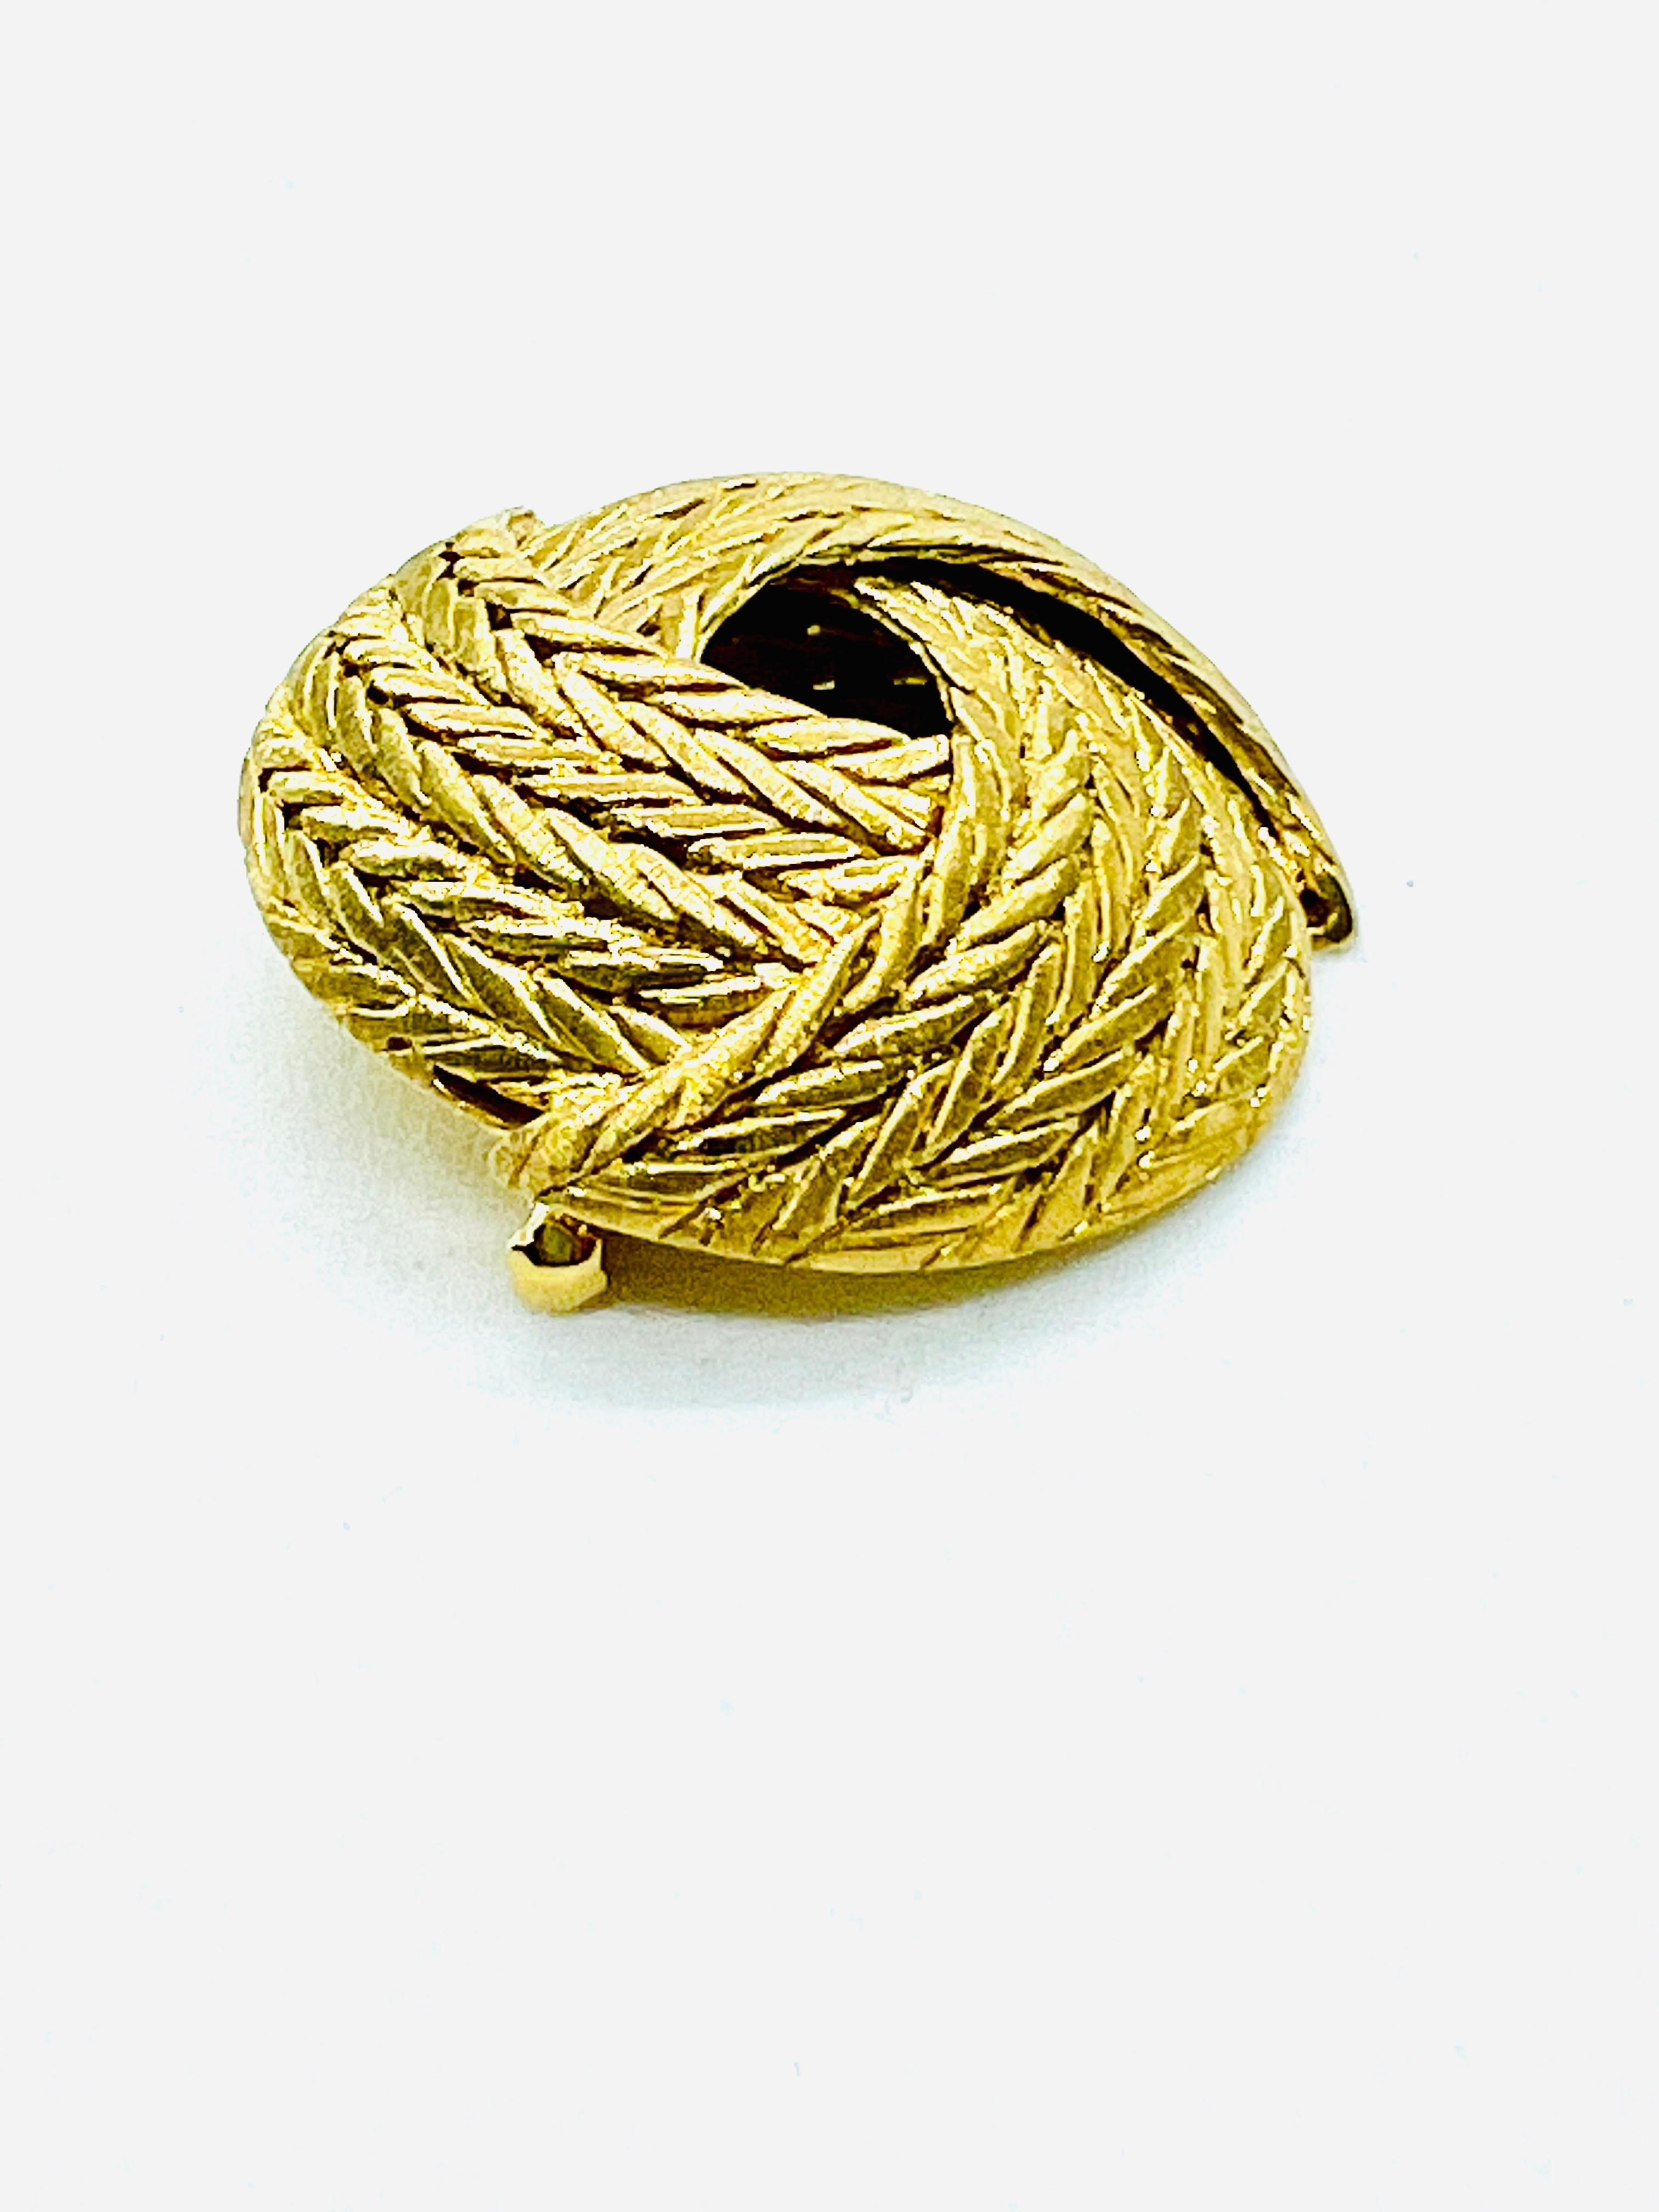 Designer Buccellati 18K yellow Gold 32mm Round woven basket weave brooch For Sale 3